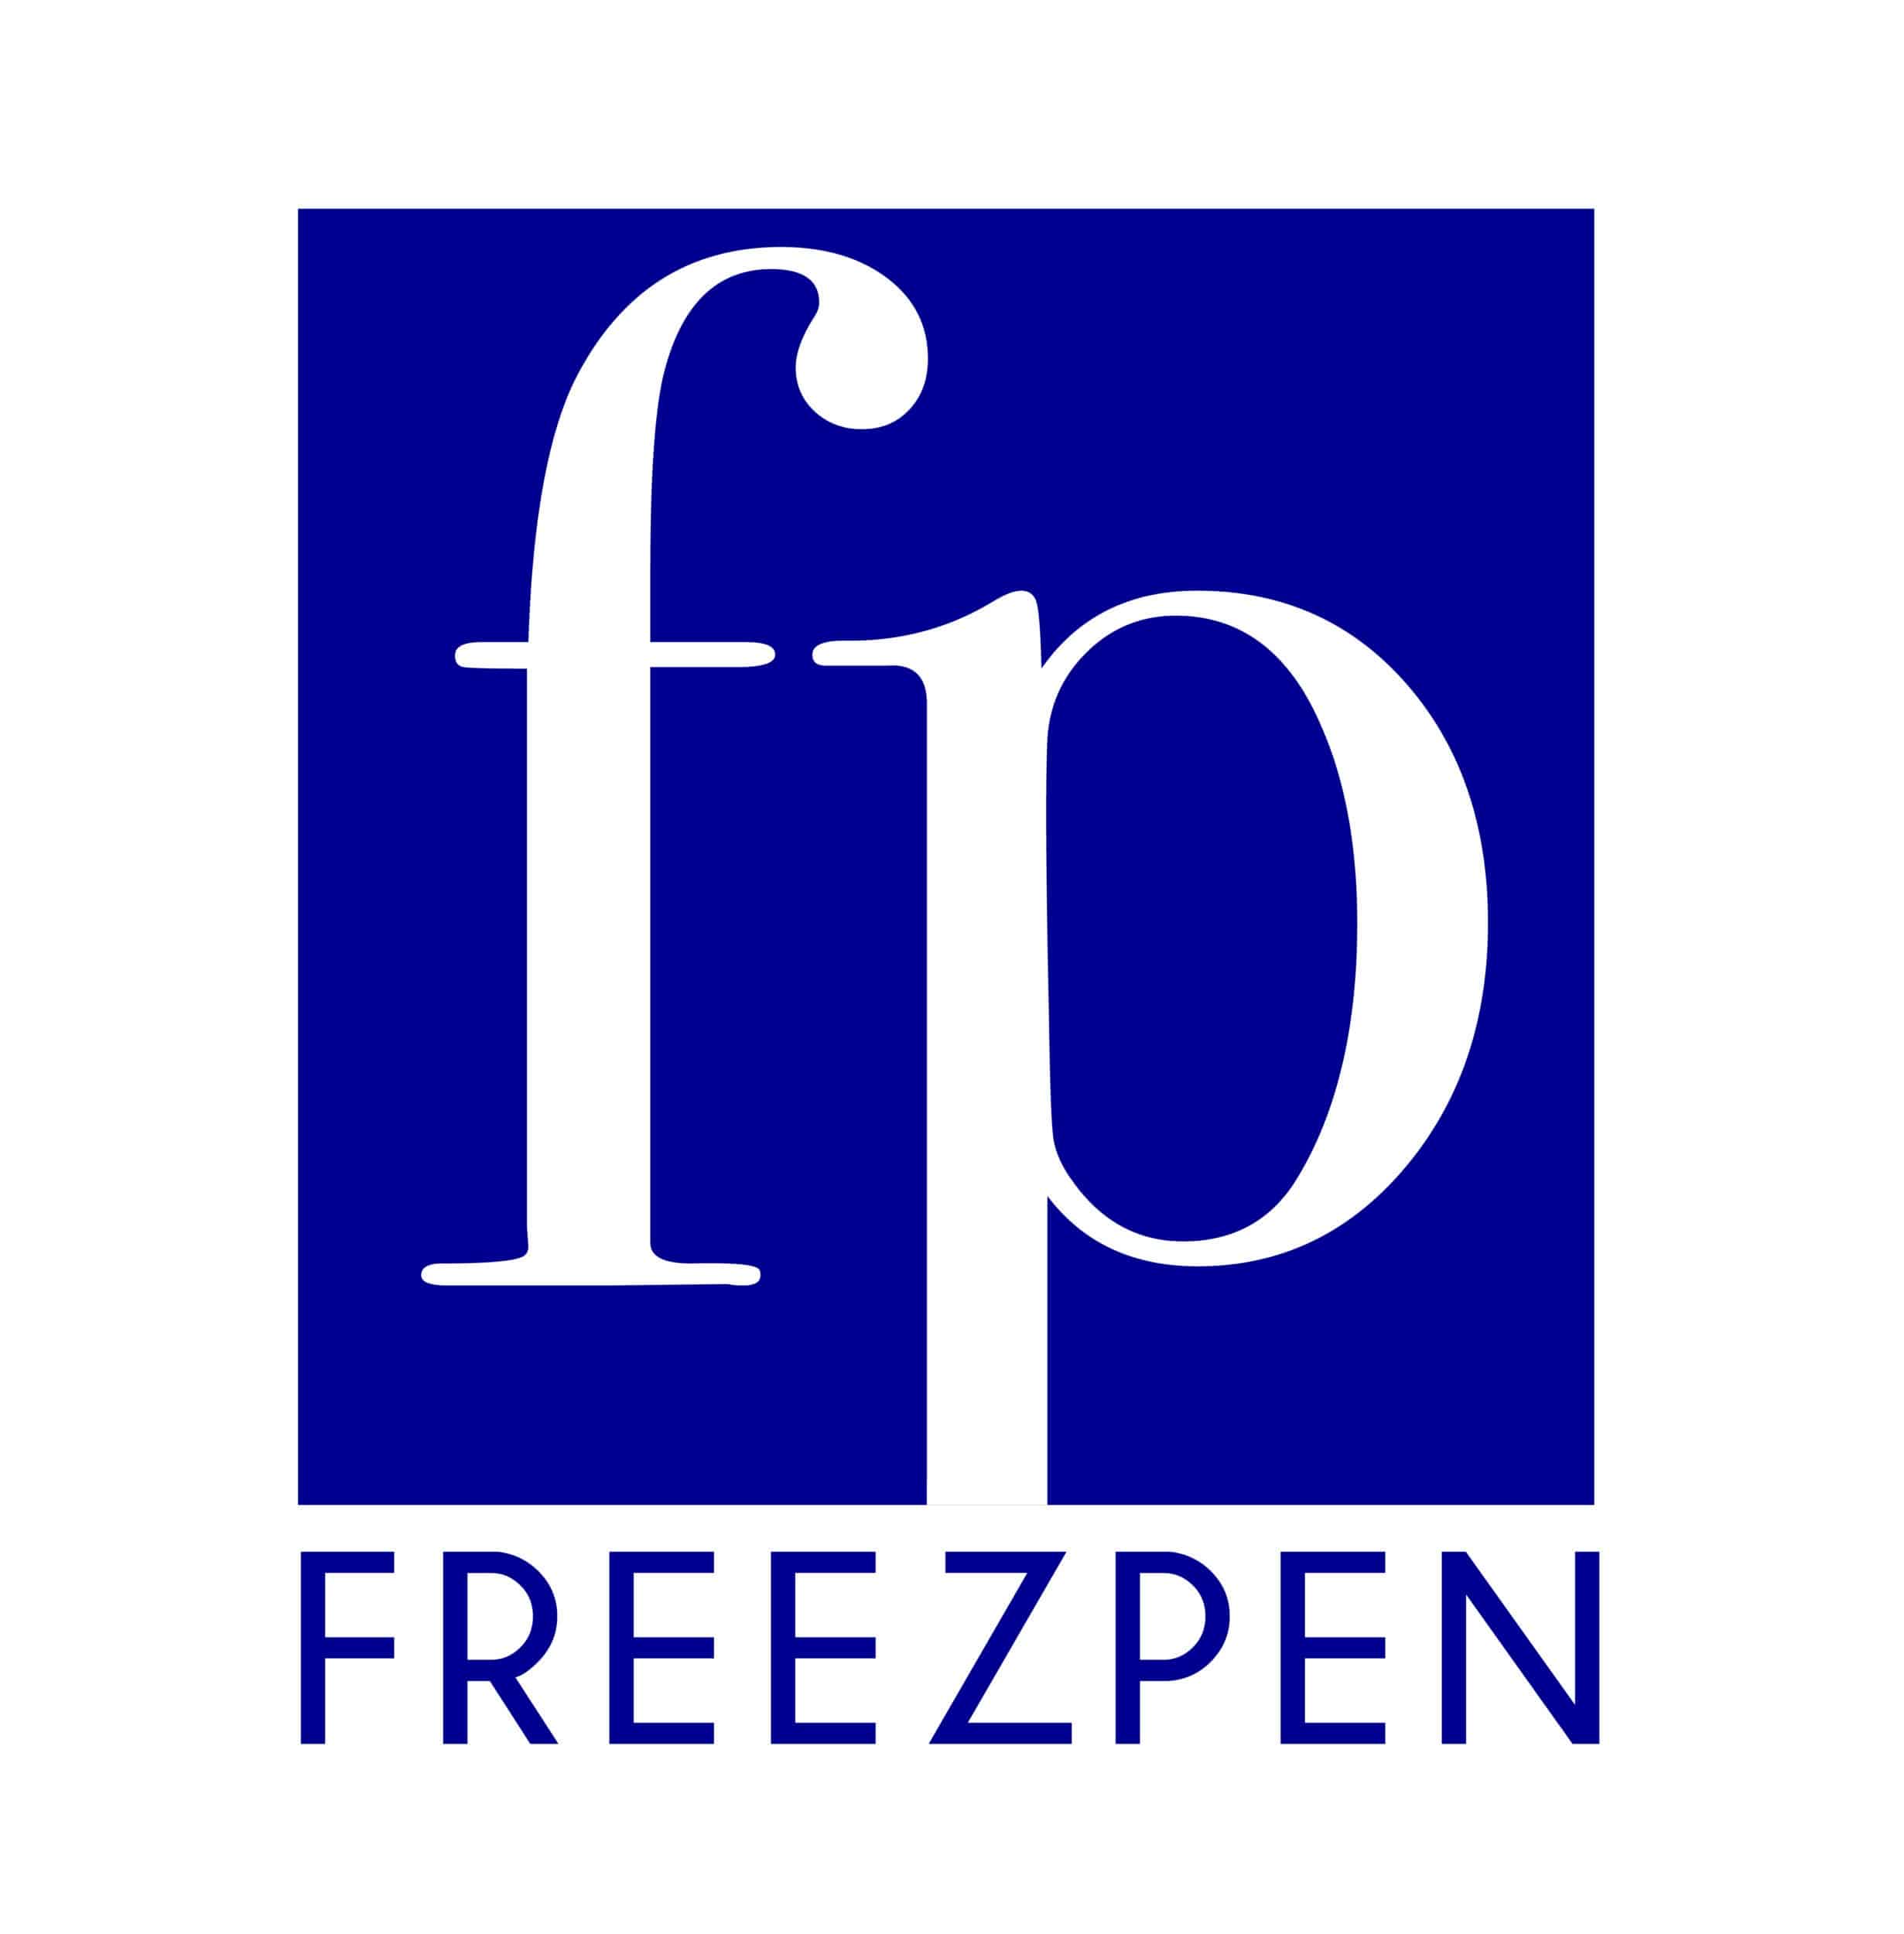 freezpen logo